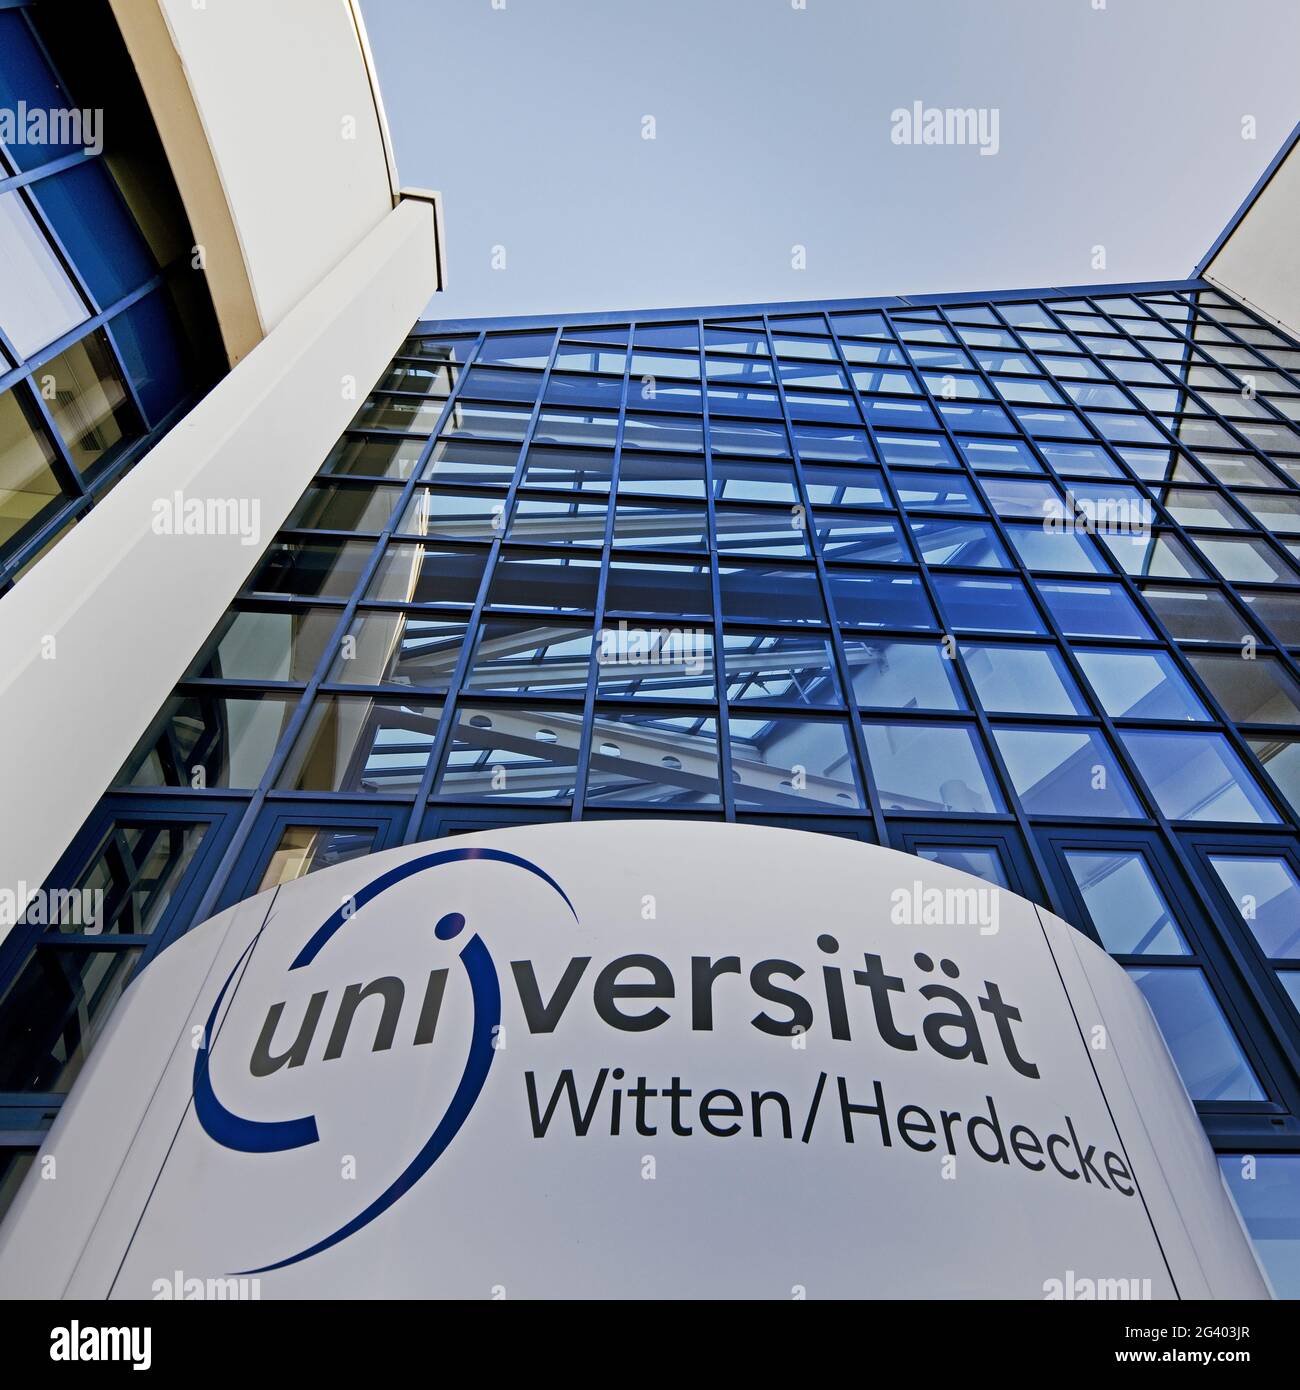 Universitaet Witten / Herdecke, first German private university, Witten, Ruhr area, Germany, Europe Stock Photo